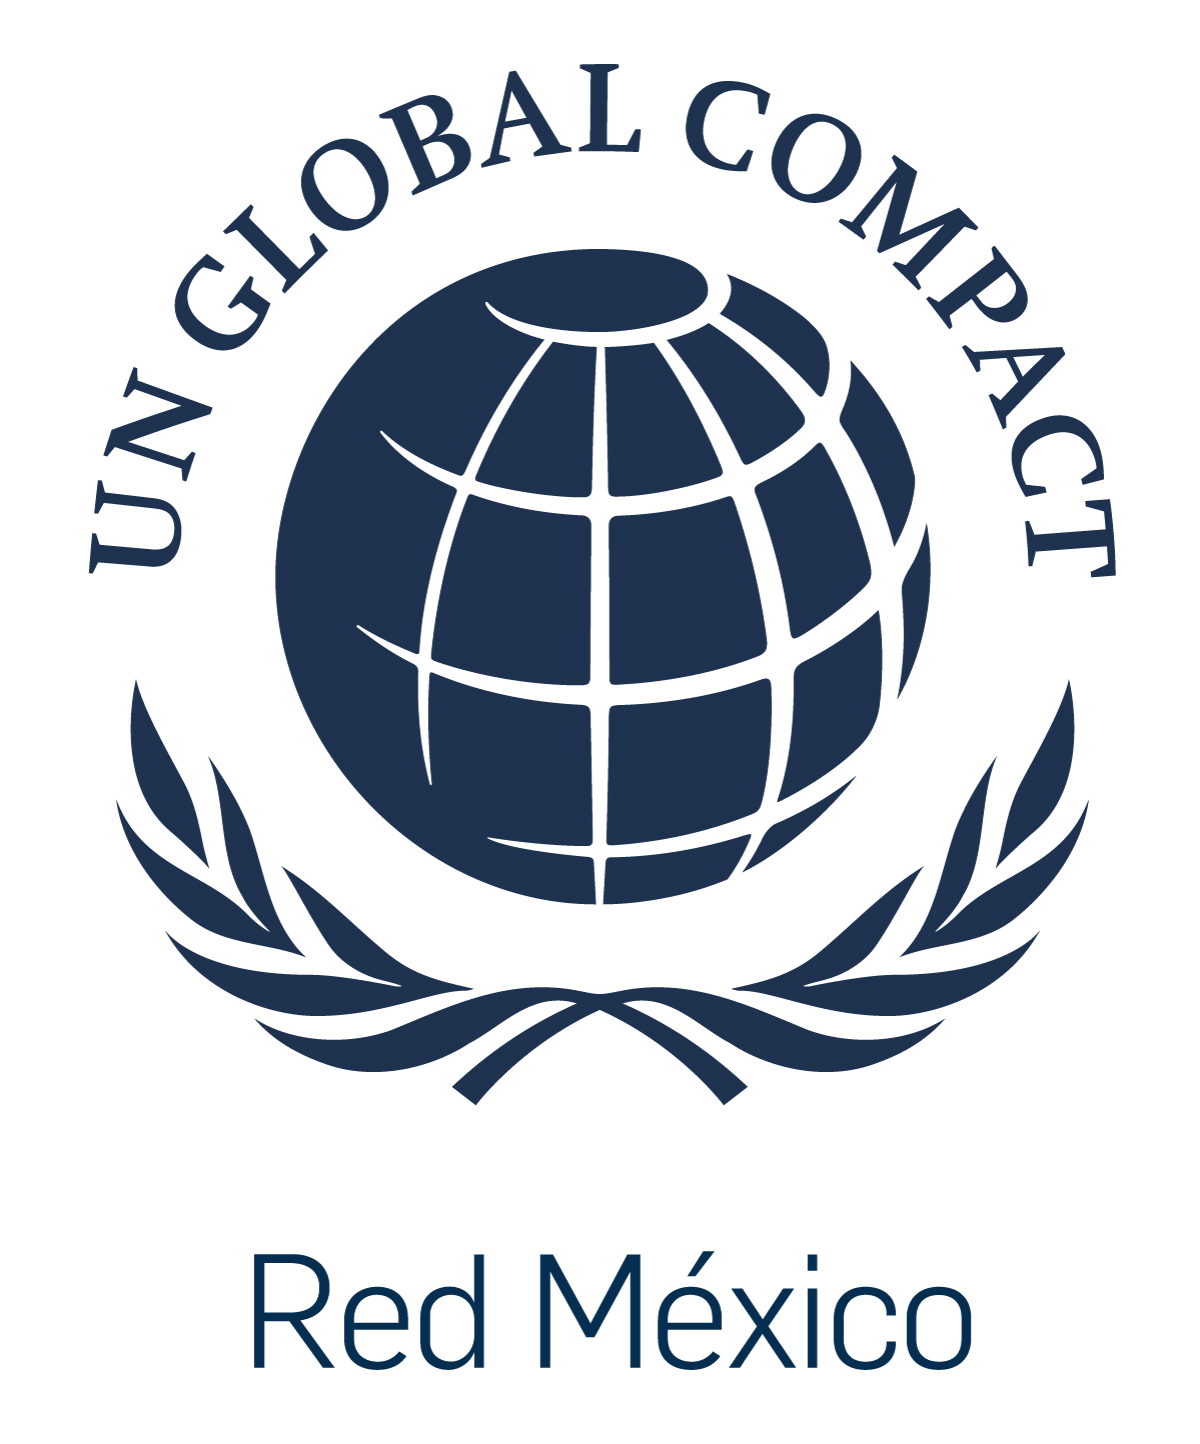 CEMEX global compact